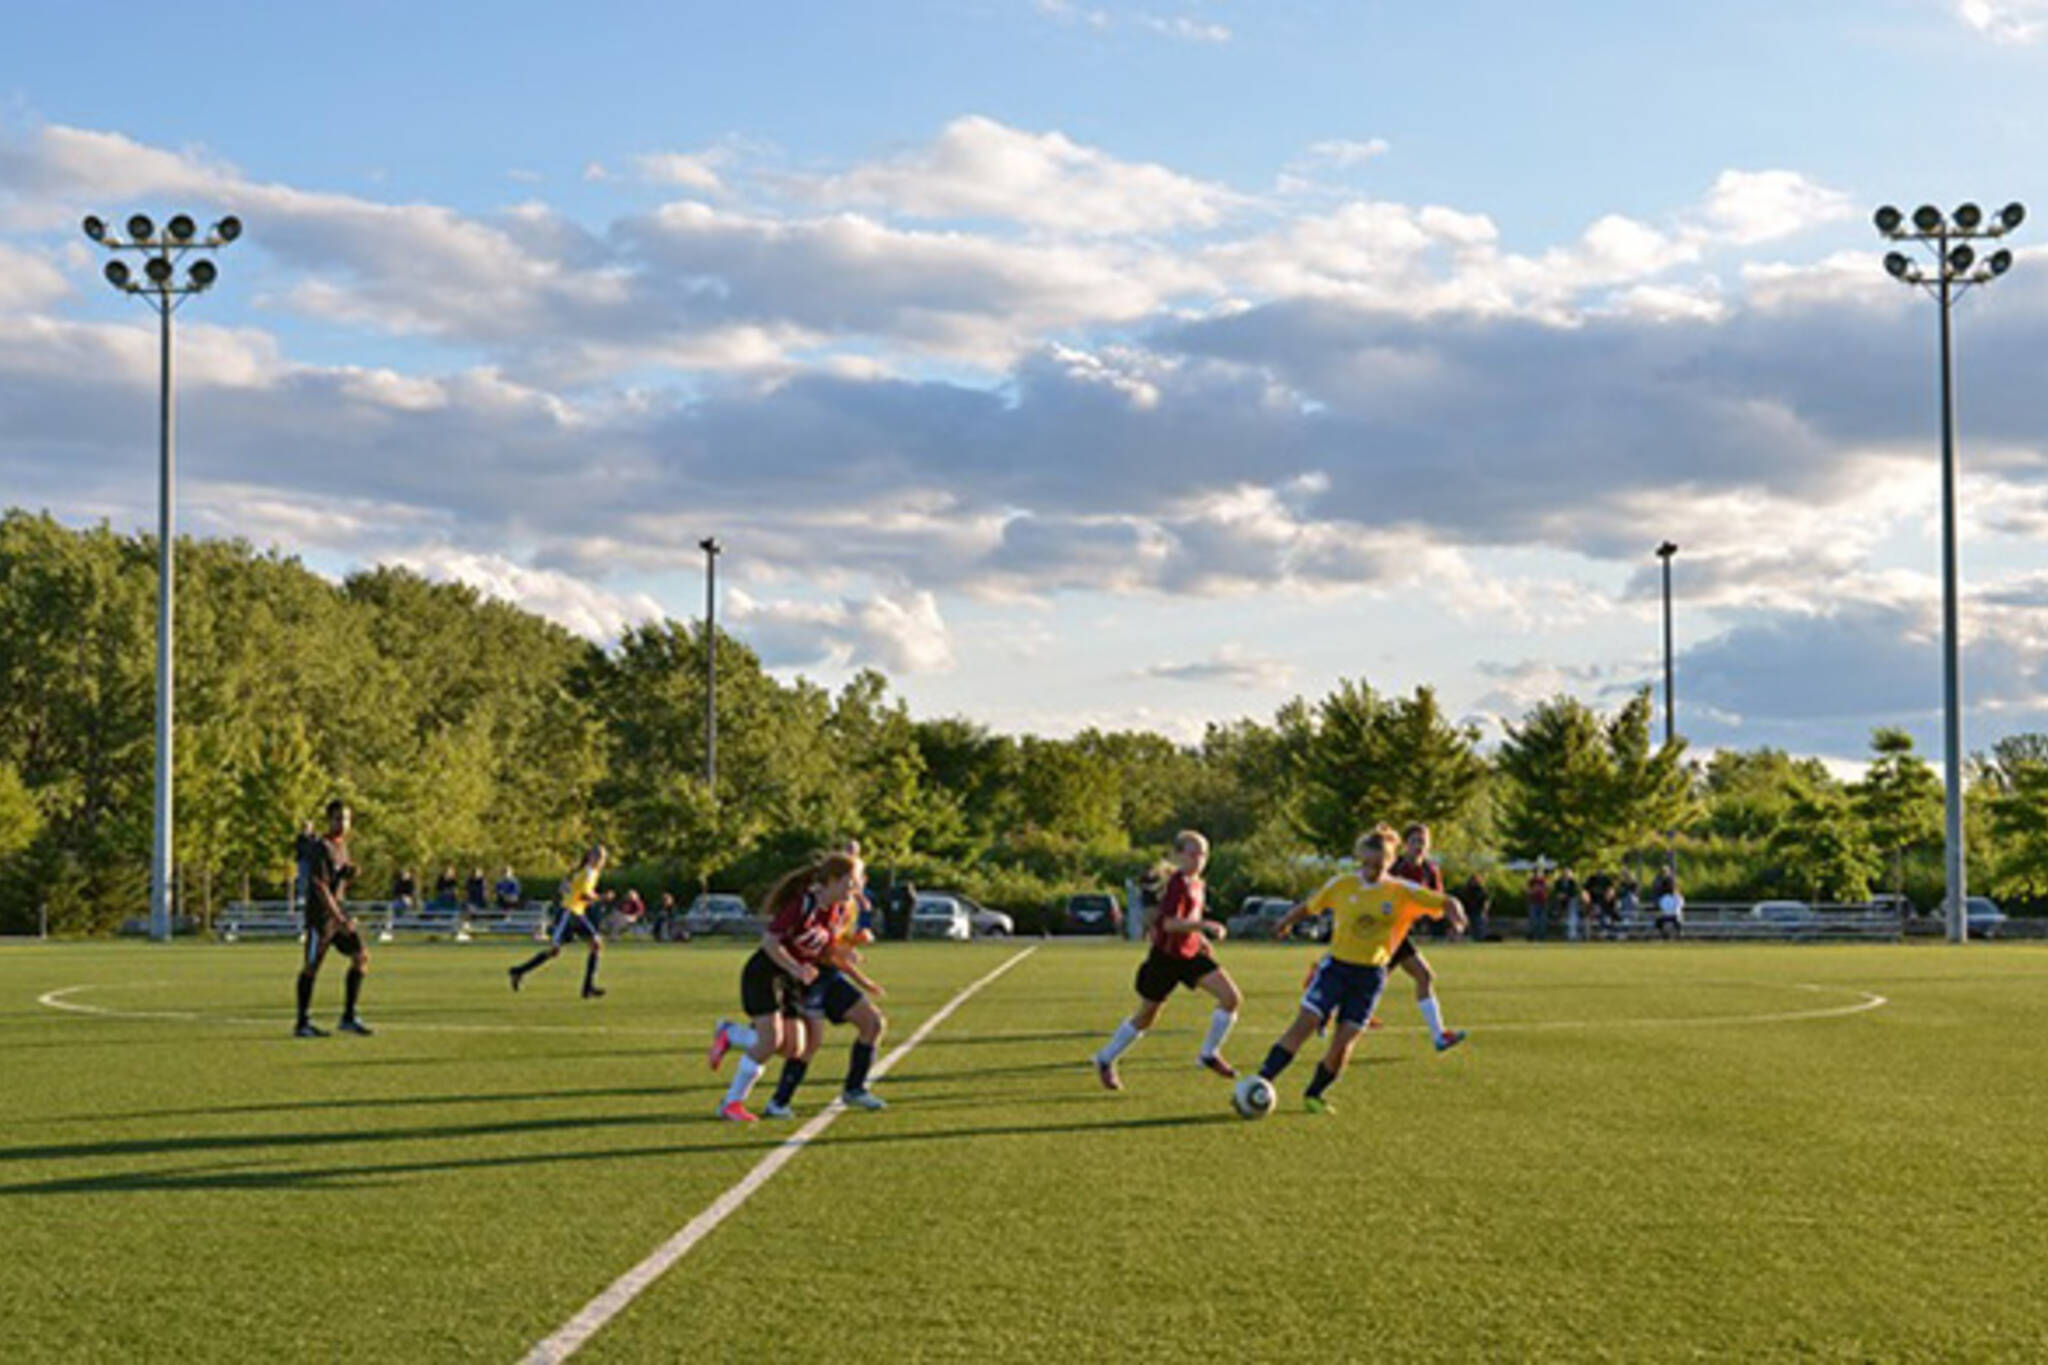 The Best Outdoor Sports Fields in Toronto